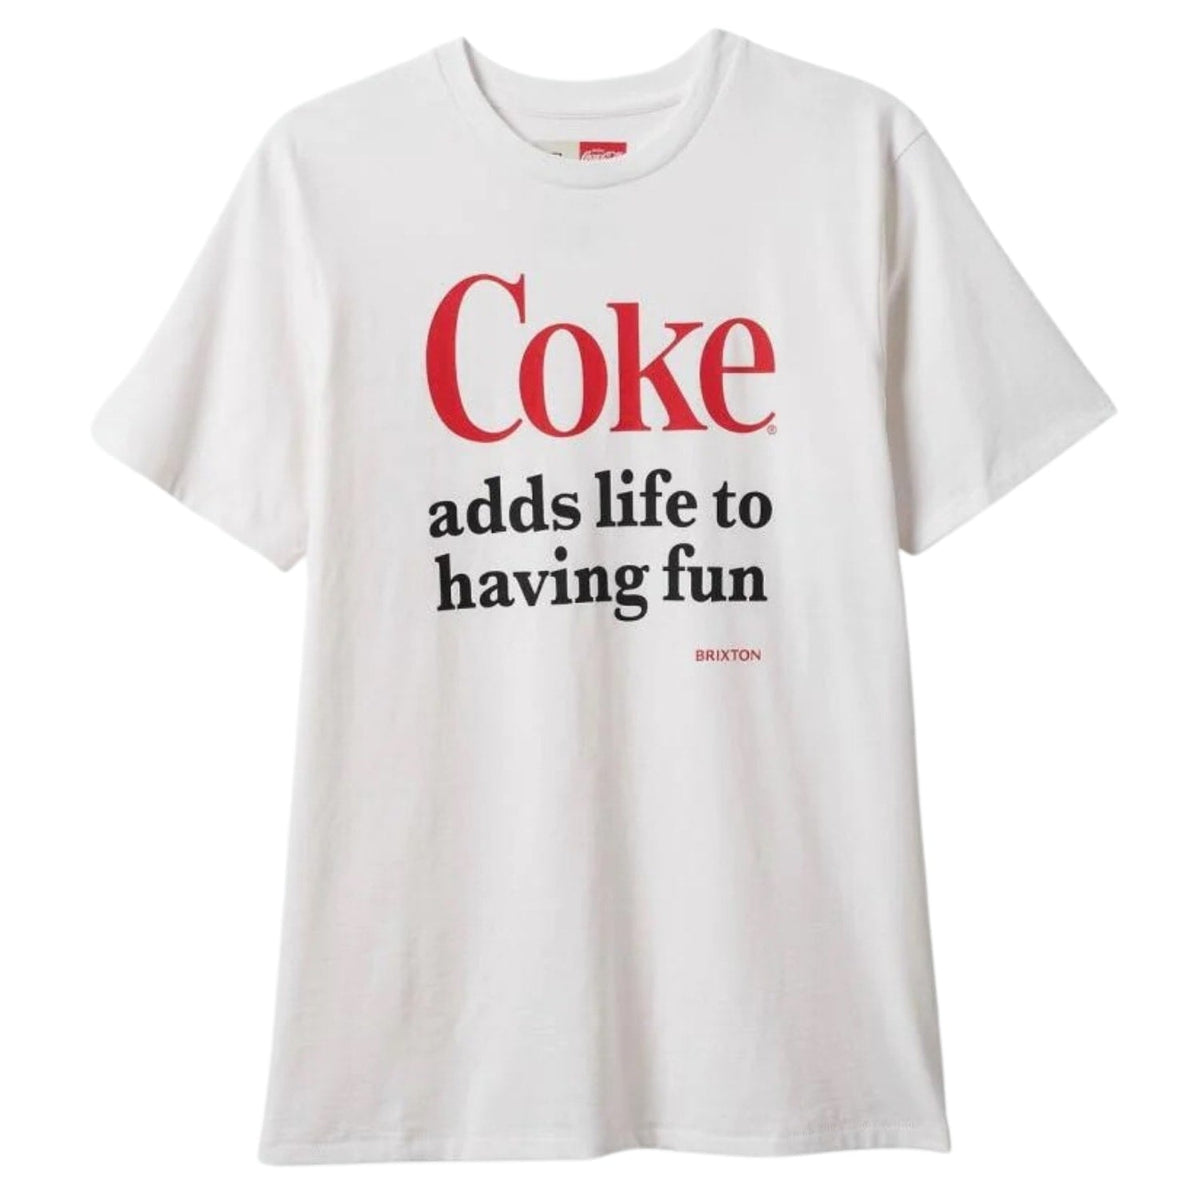 Brixton X Coca-Cola Having Fun T-Shirt - White - Mens Graphic T-Shirt by Brixton